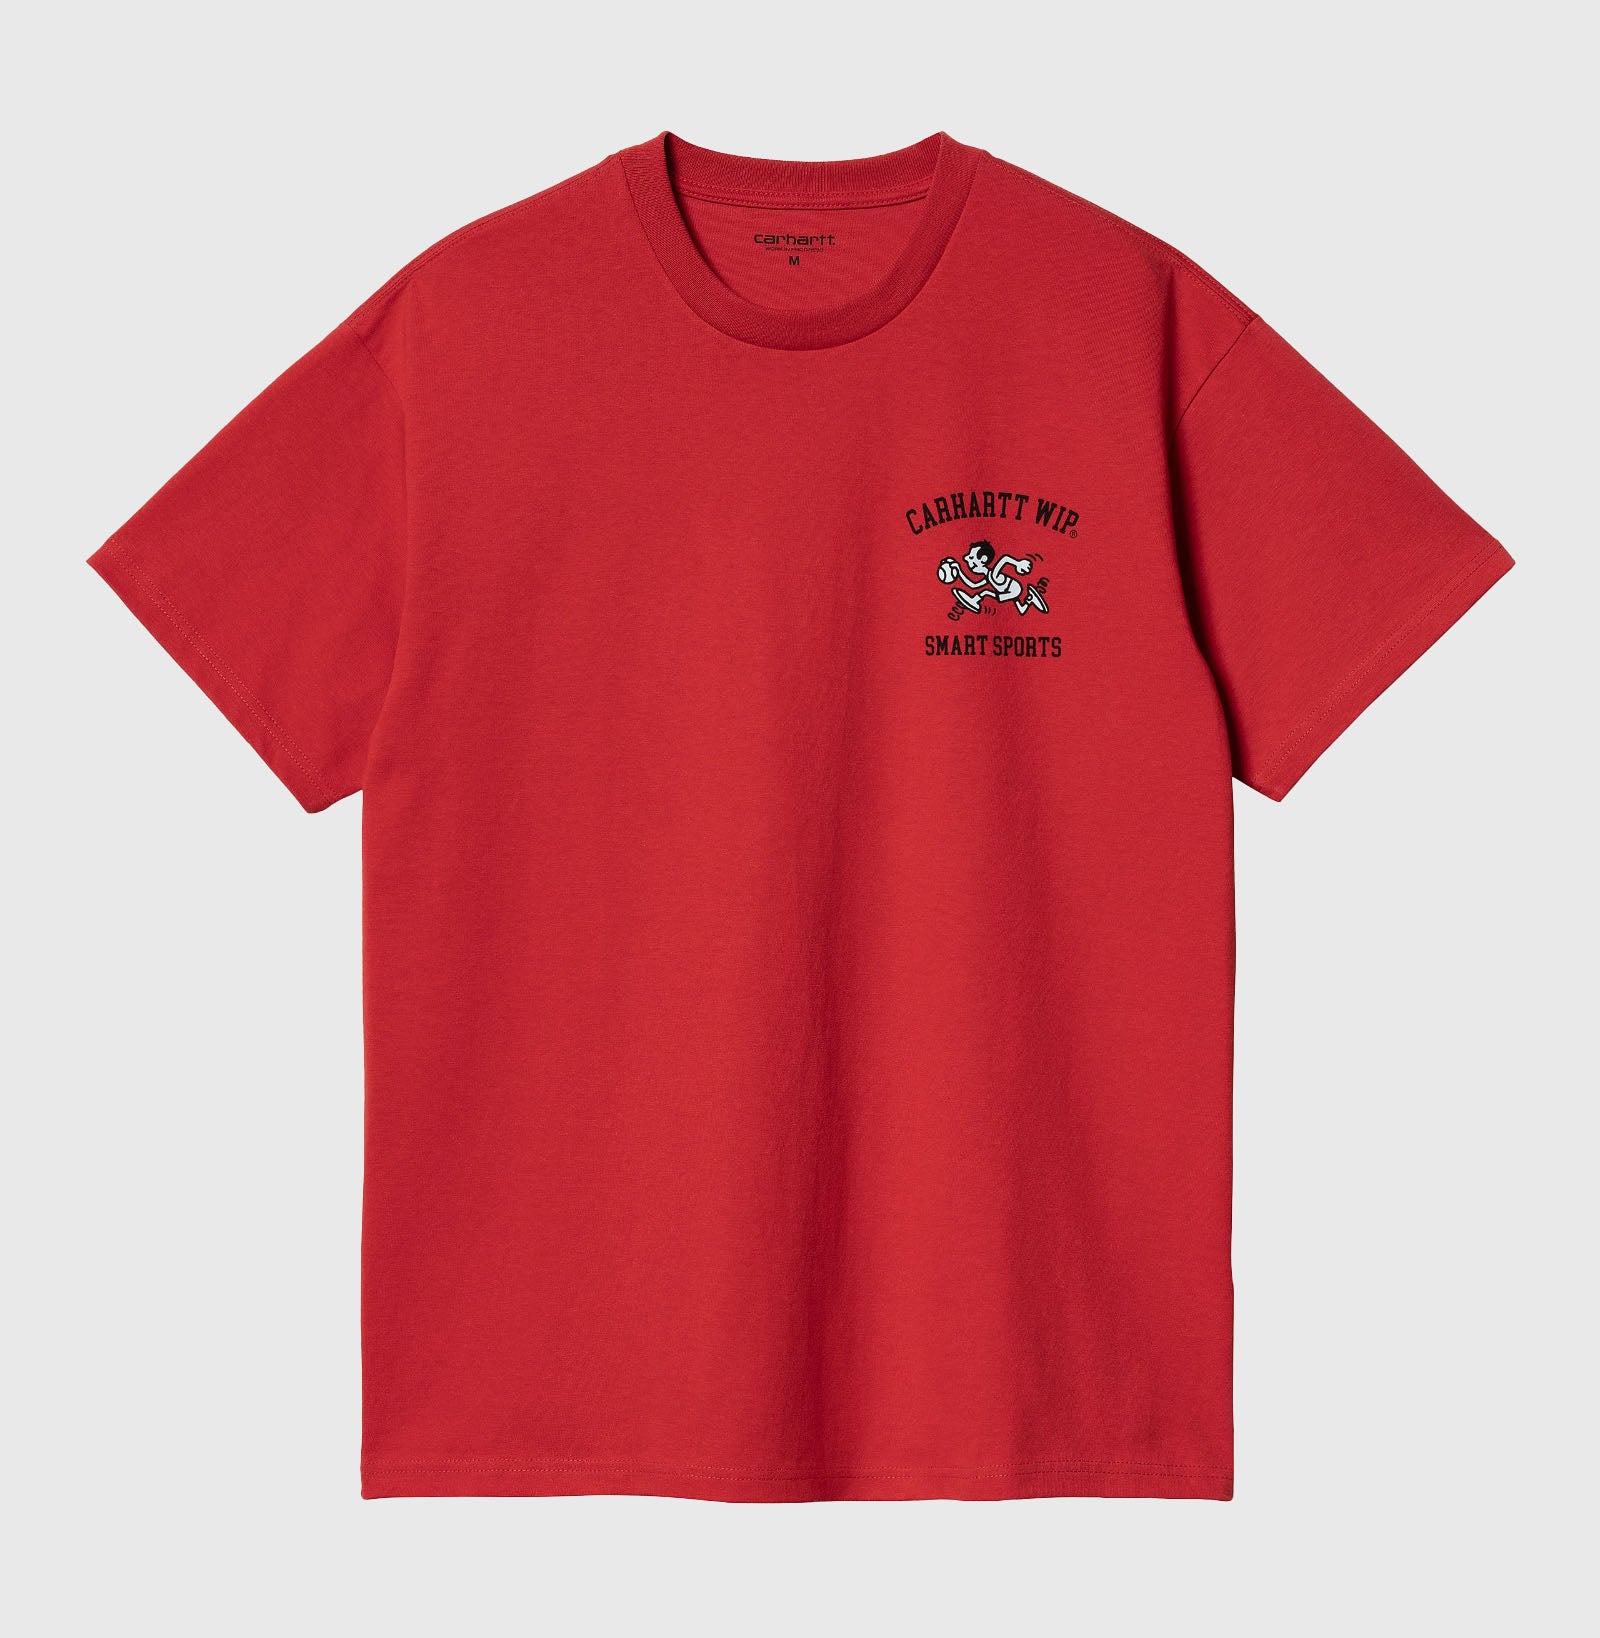 Carhartt WIP T-Shirt S/S Smart Sports Cotton Red - 6